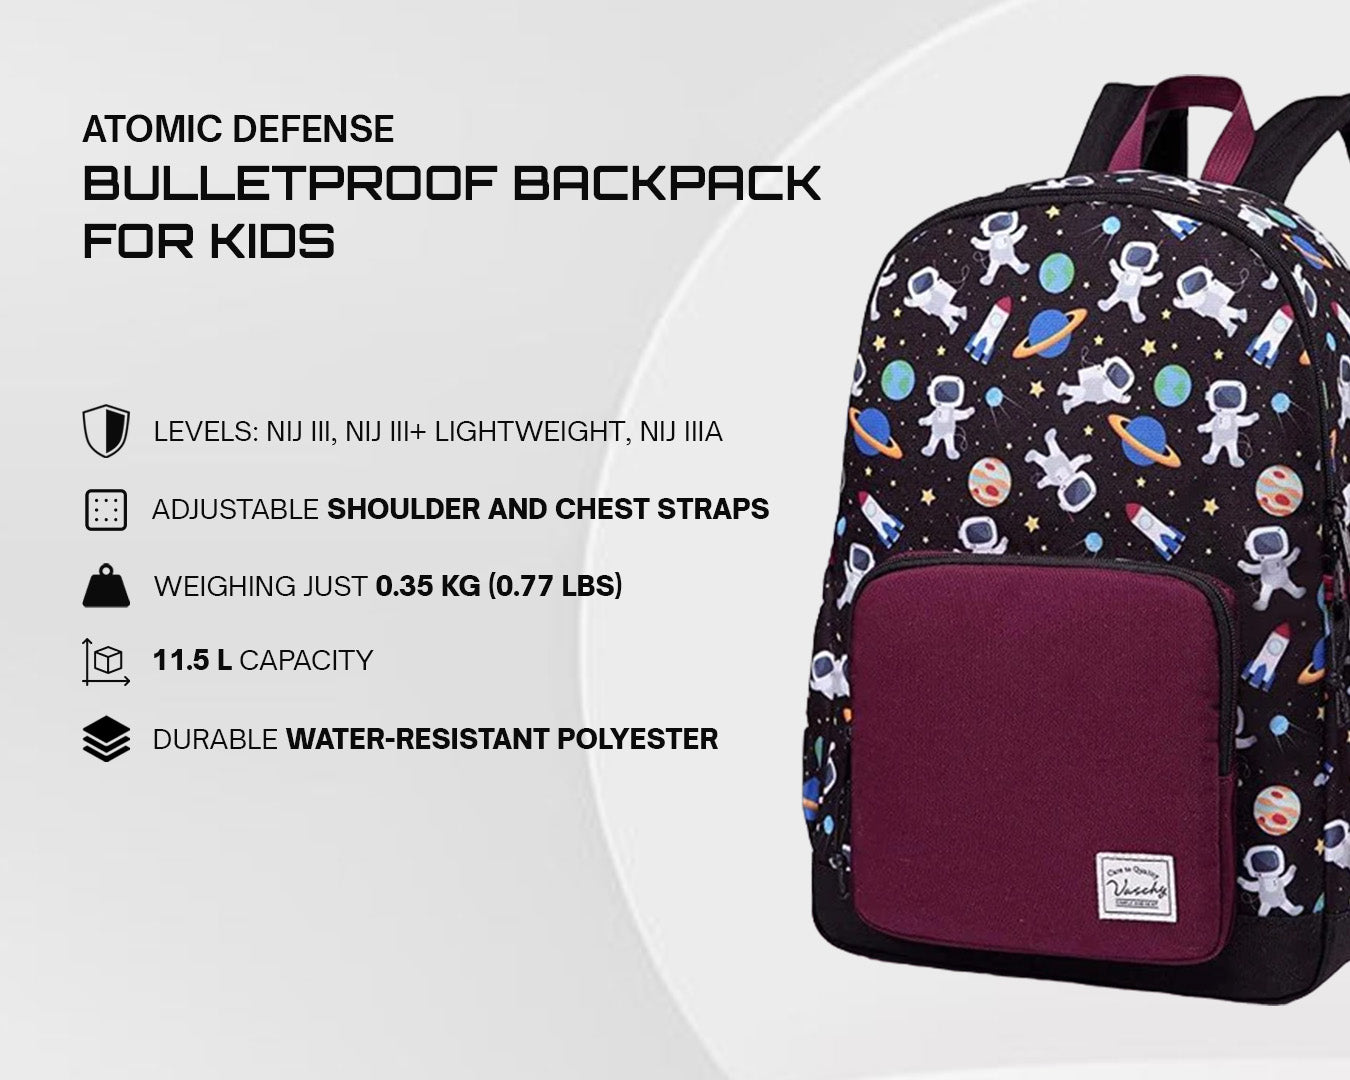 Water-resistant polyester and adjustable shoulder and chest straps bulletproof backpack